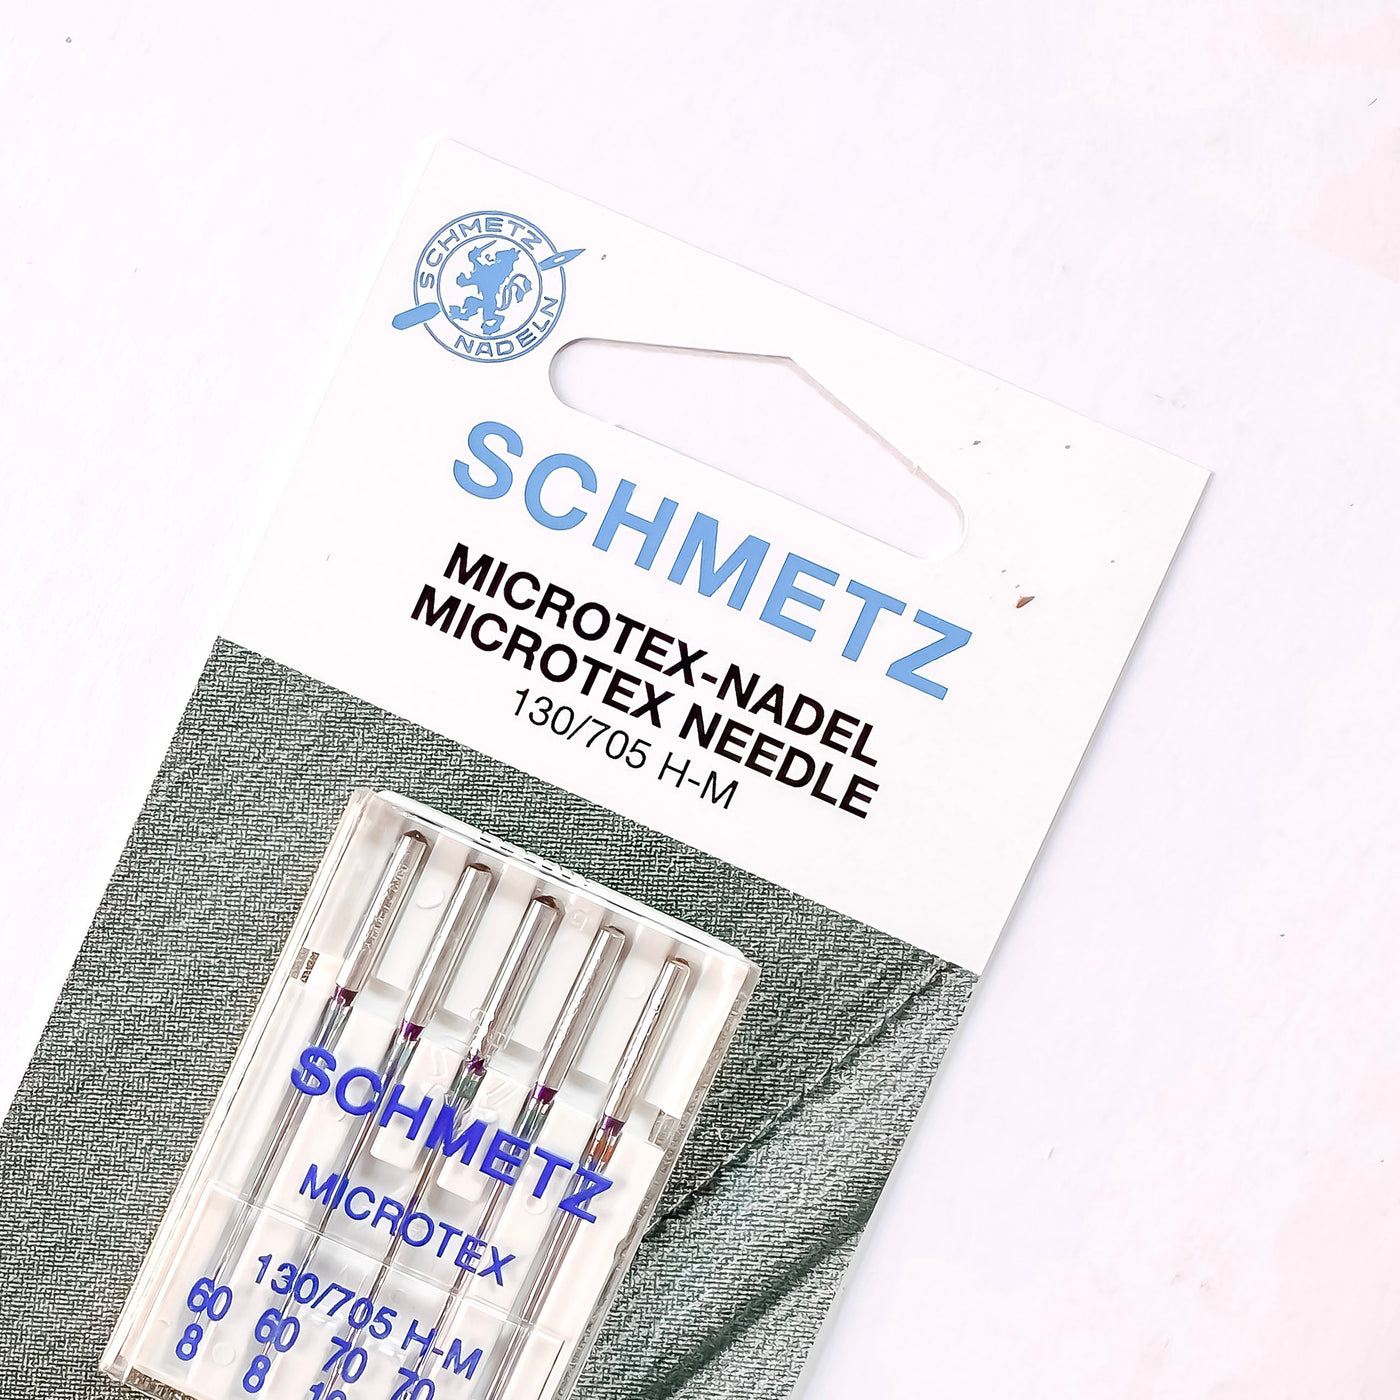 Schmetz Microtex Needles